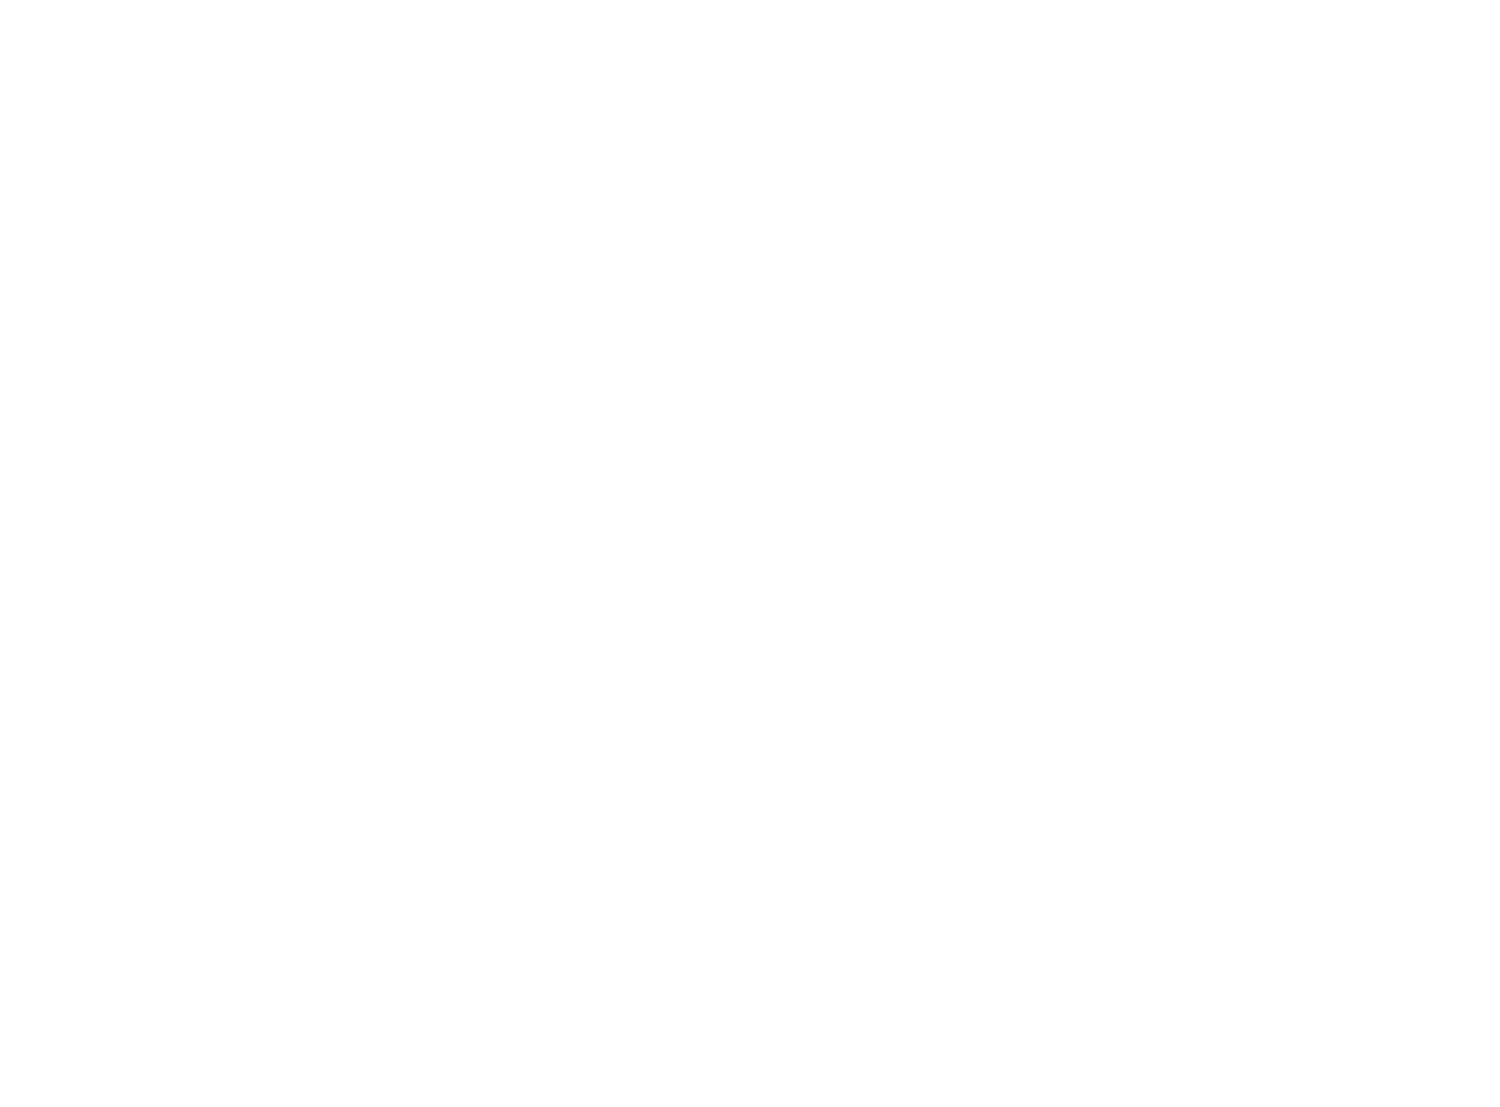 Plume House